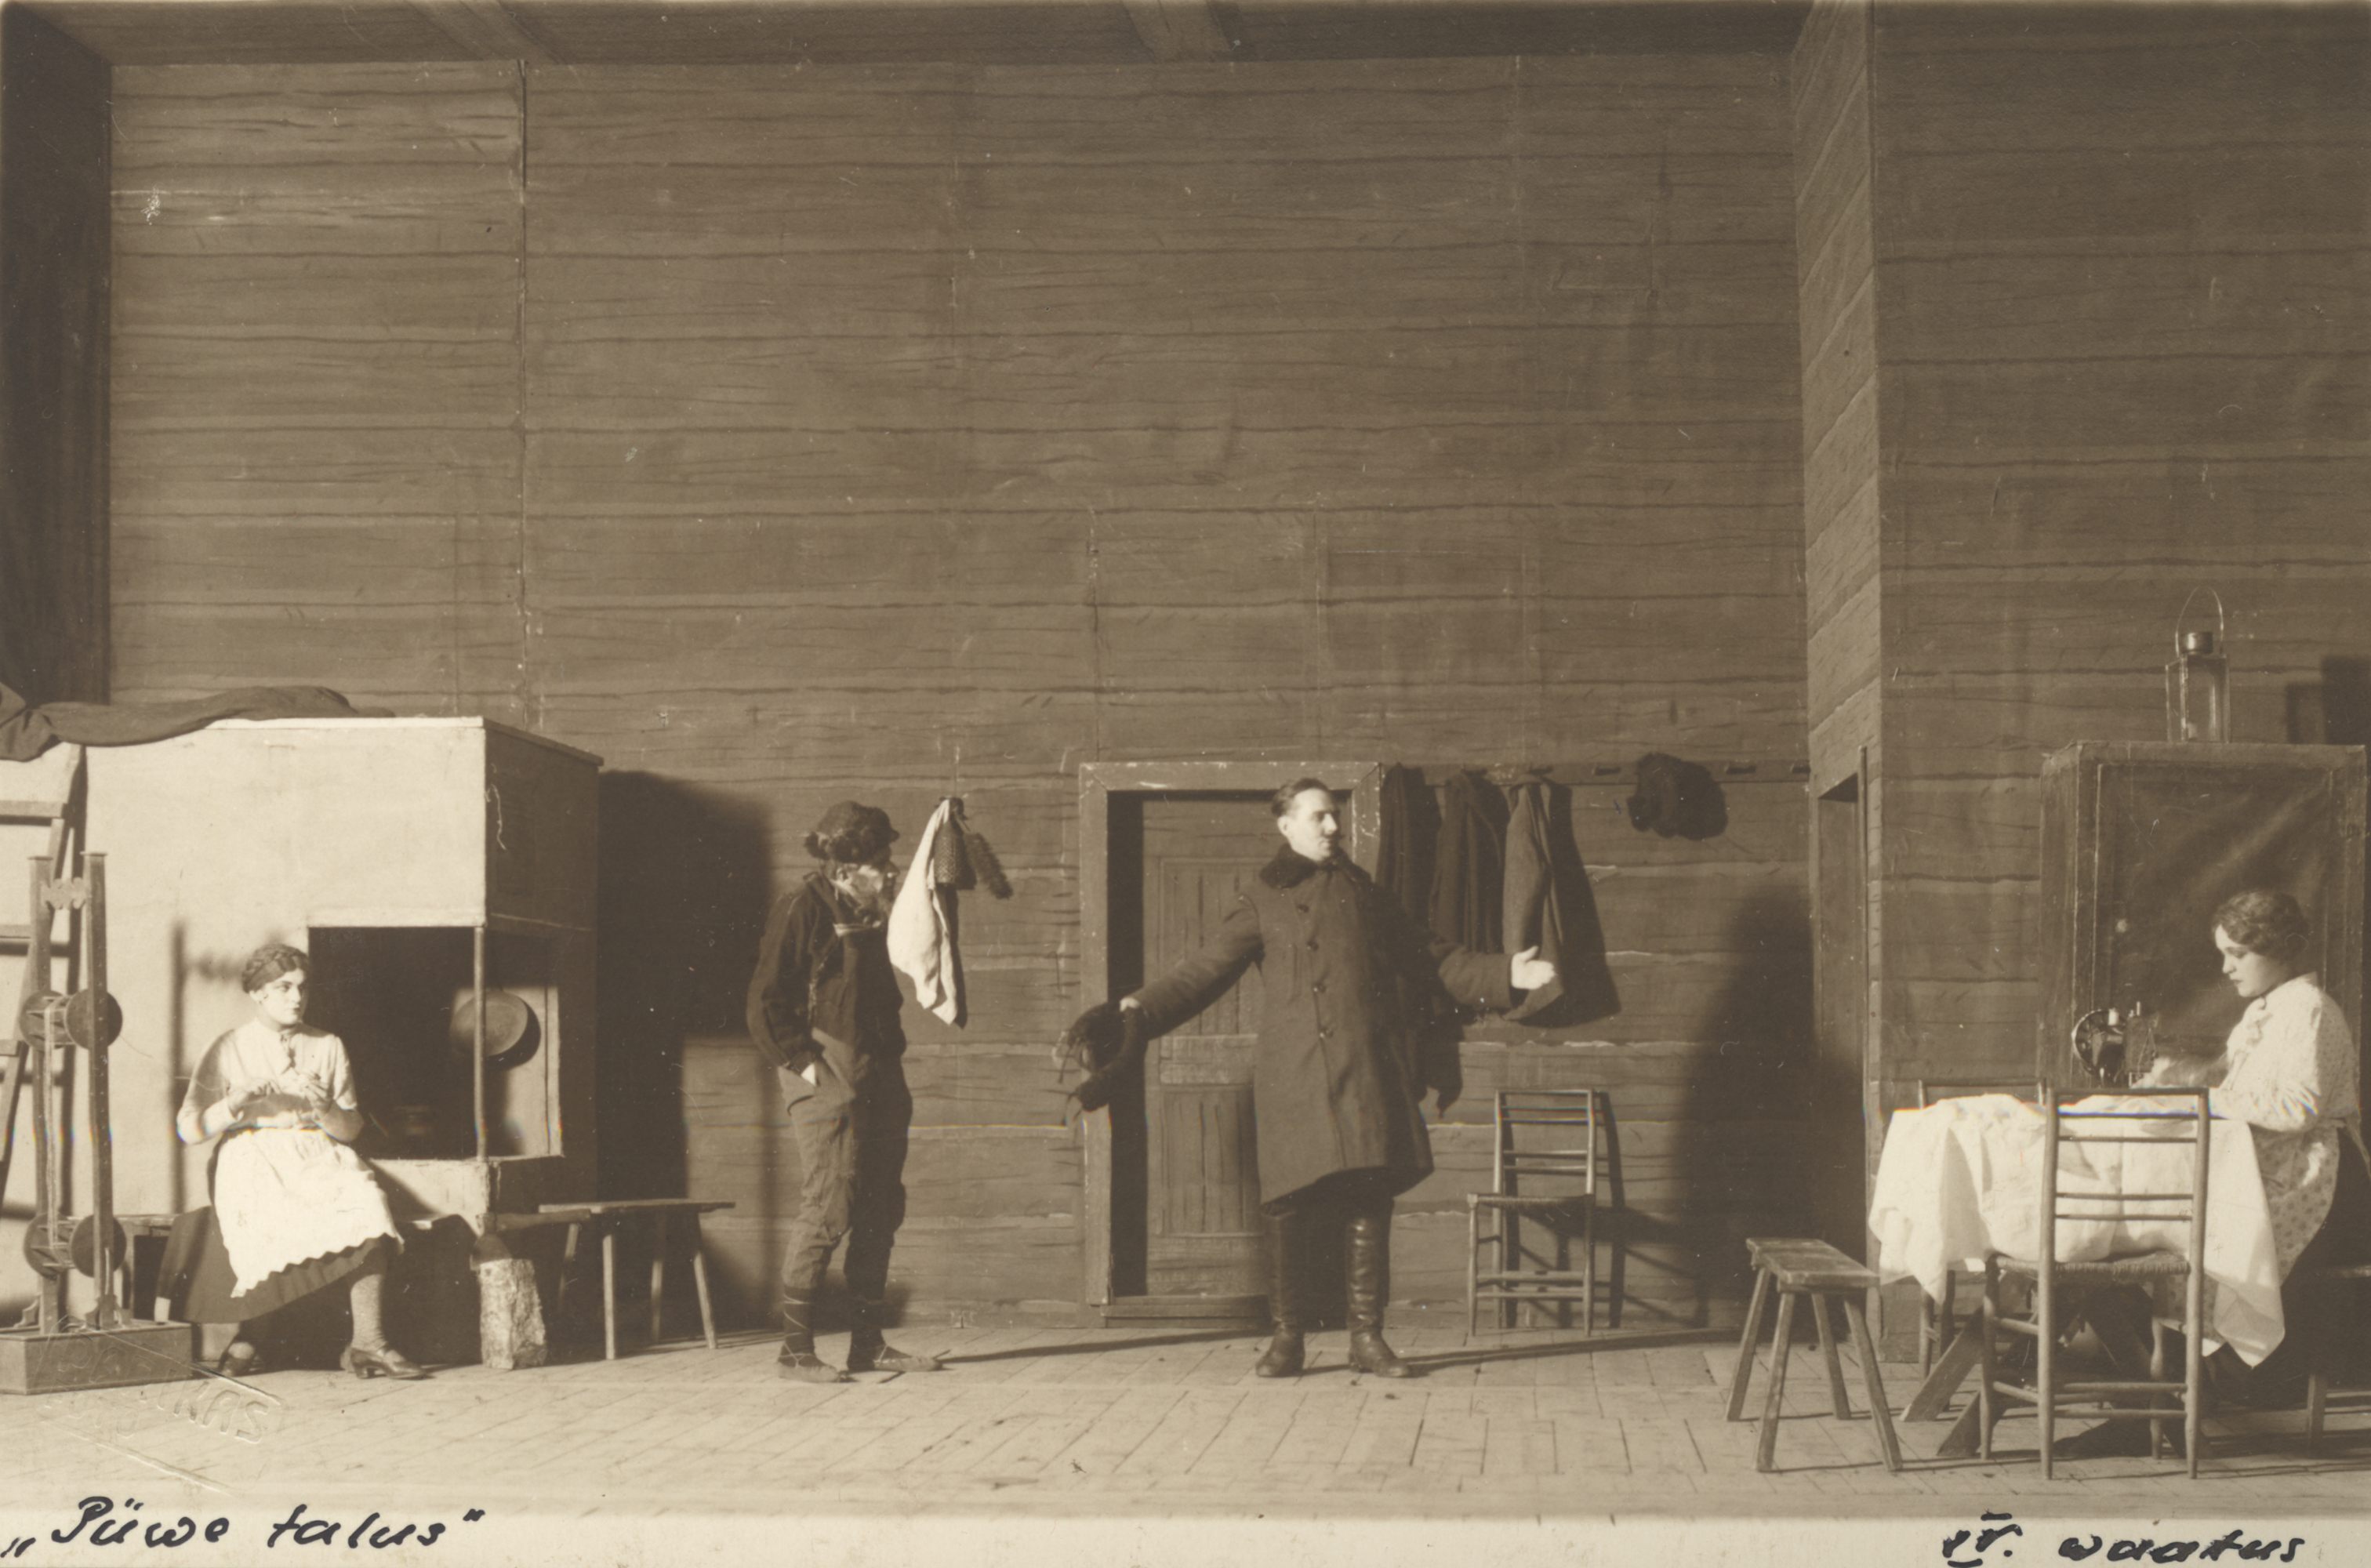 A. Kitzberg's "Püve Farm" in "Estonia" in 1926. IV clothes